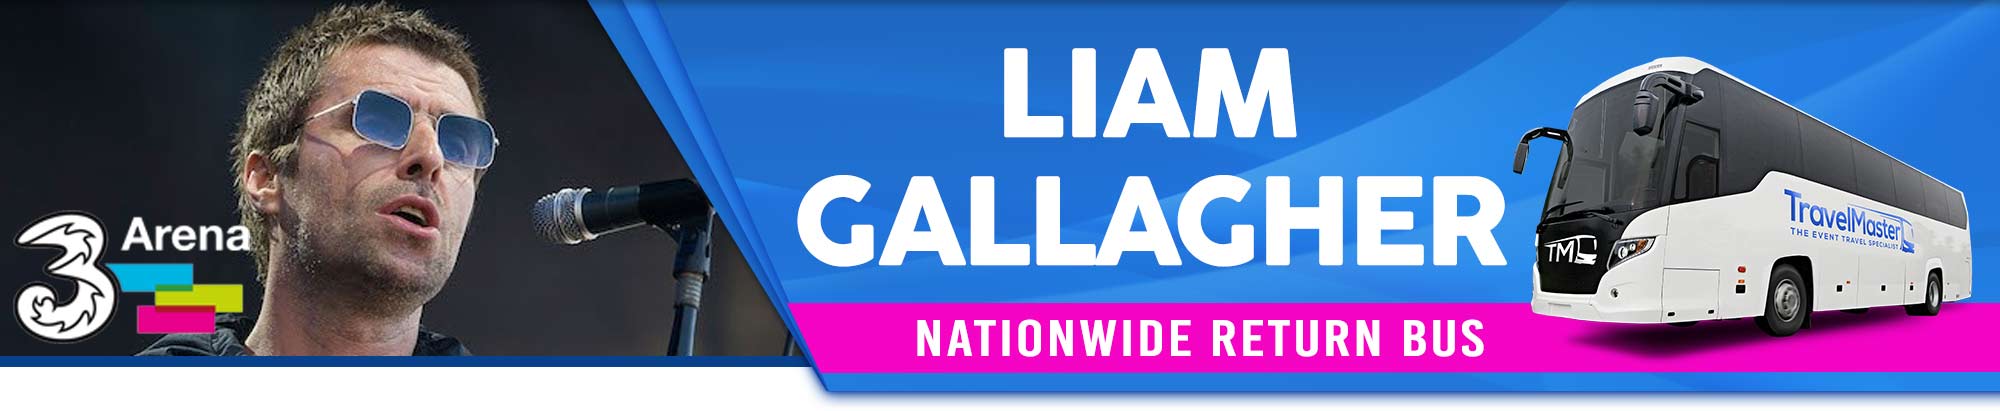 Bus to Liam Gallagher 3Arena - Nationwide Return 24th Nov 2019